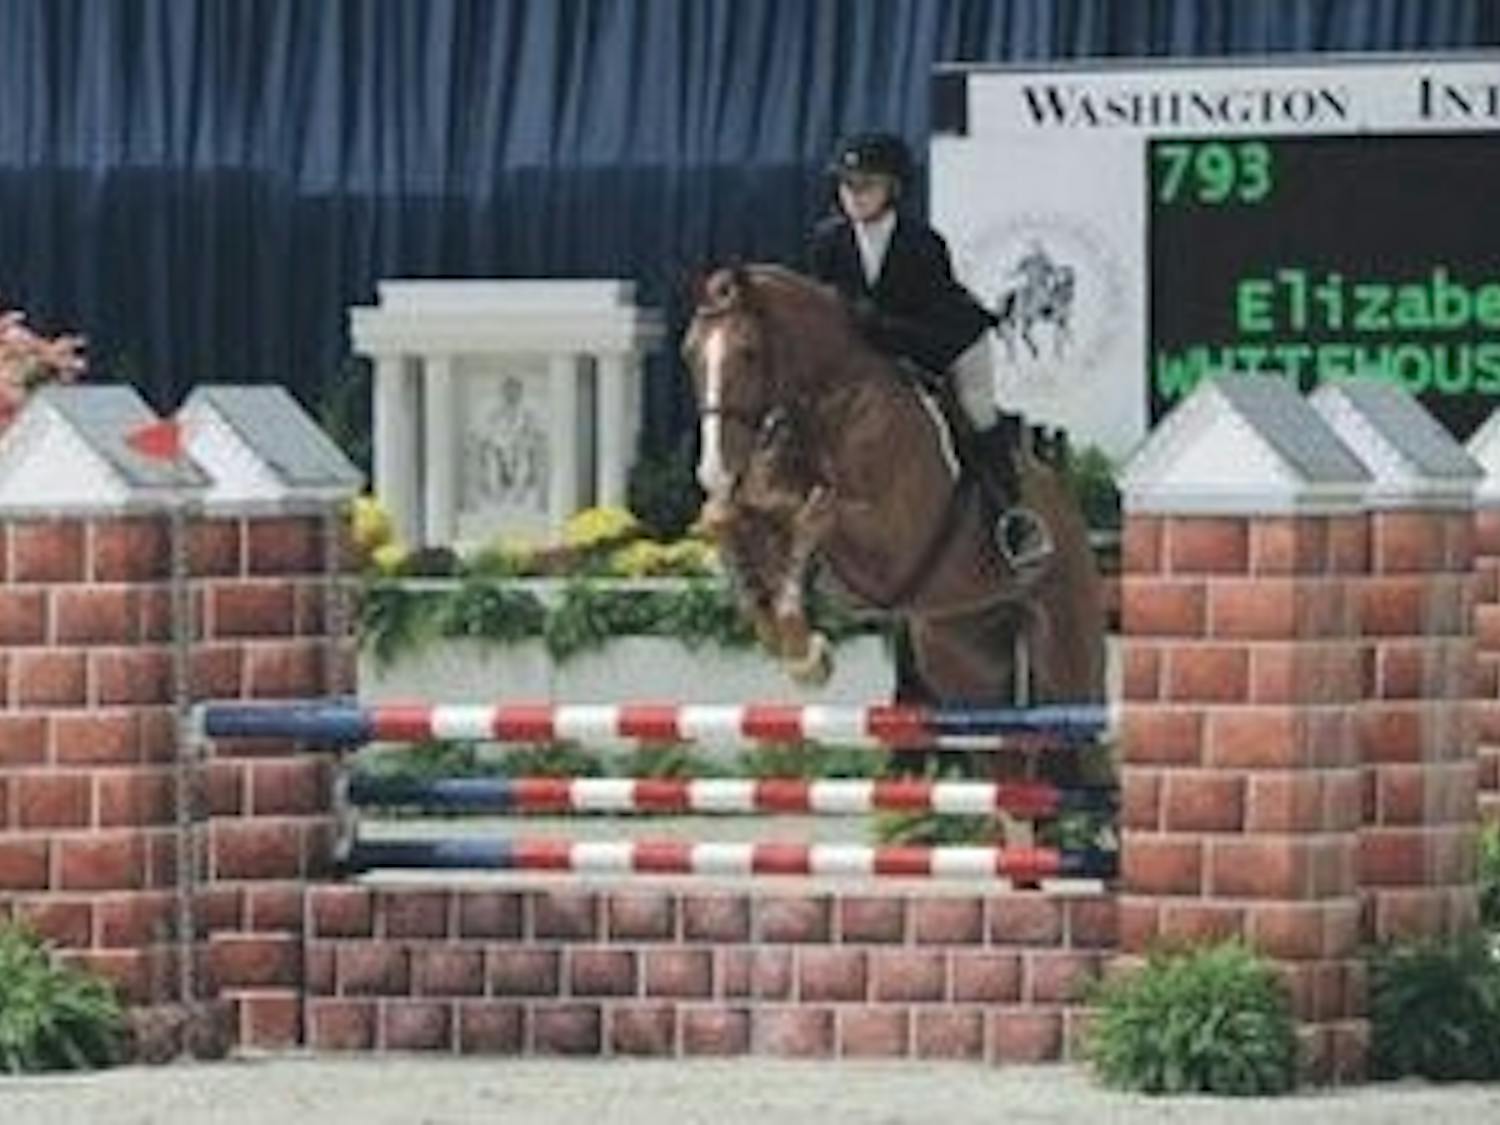 Elizabeth Benson won the equitation finals last weekend in the Washington International Horse Show. (Courtesy of Elizabeth Benson)